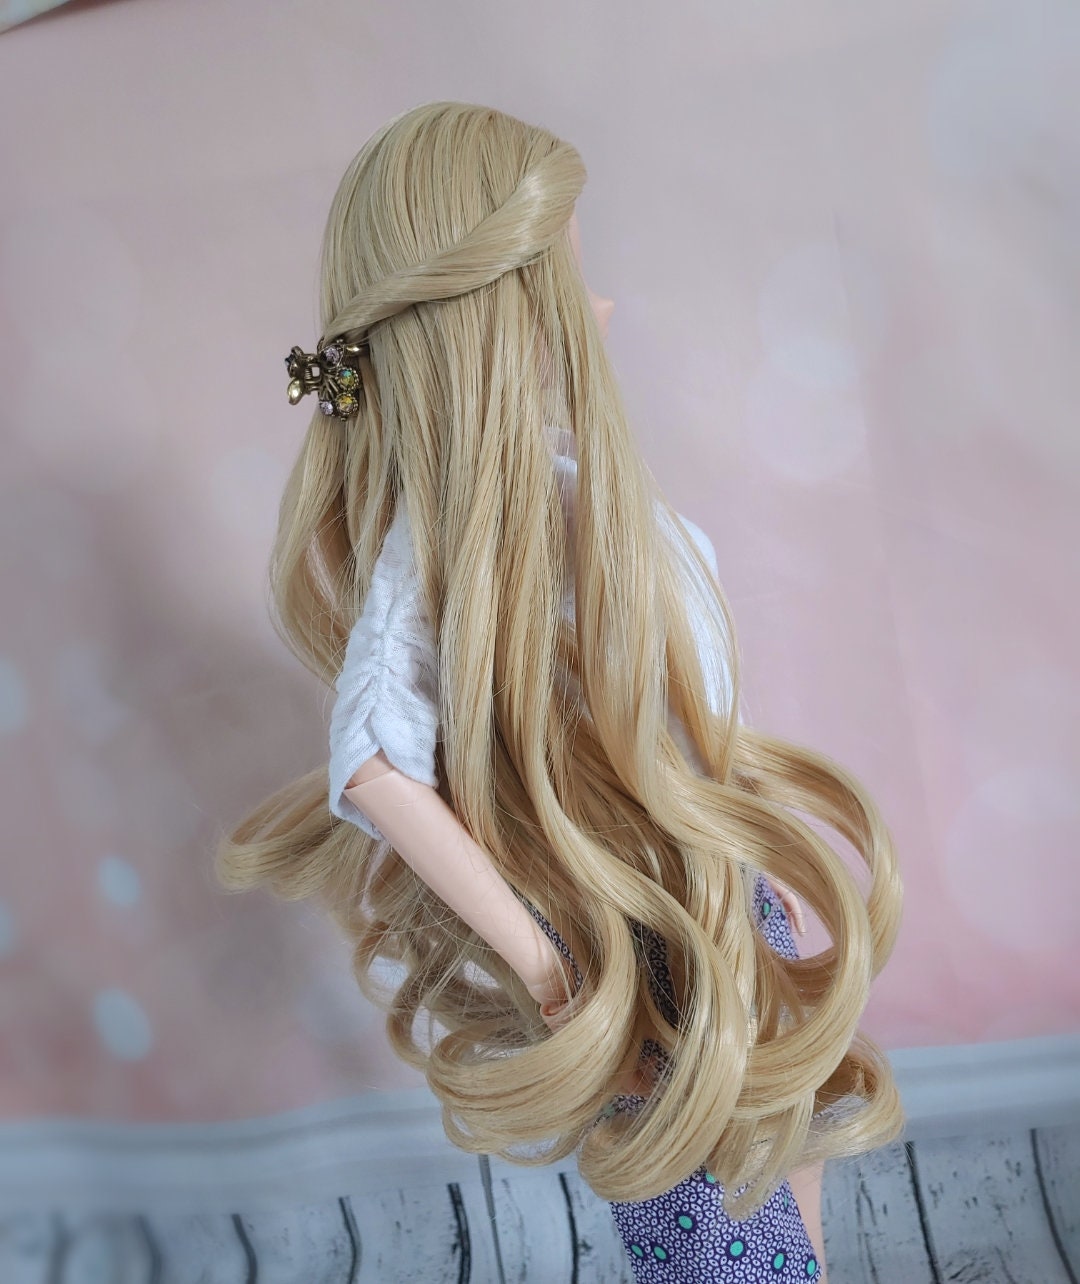 Custom doll Wig for Smart Dolls- Heat Safe - Tangle Resistant- 8.5" head size of Bjd, SD, Dollfie Dream dolls  Blonde Curls